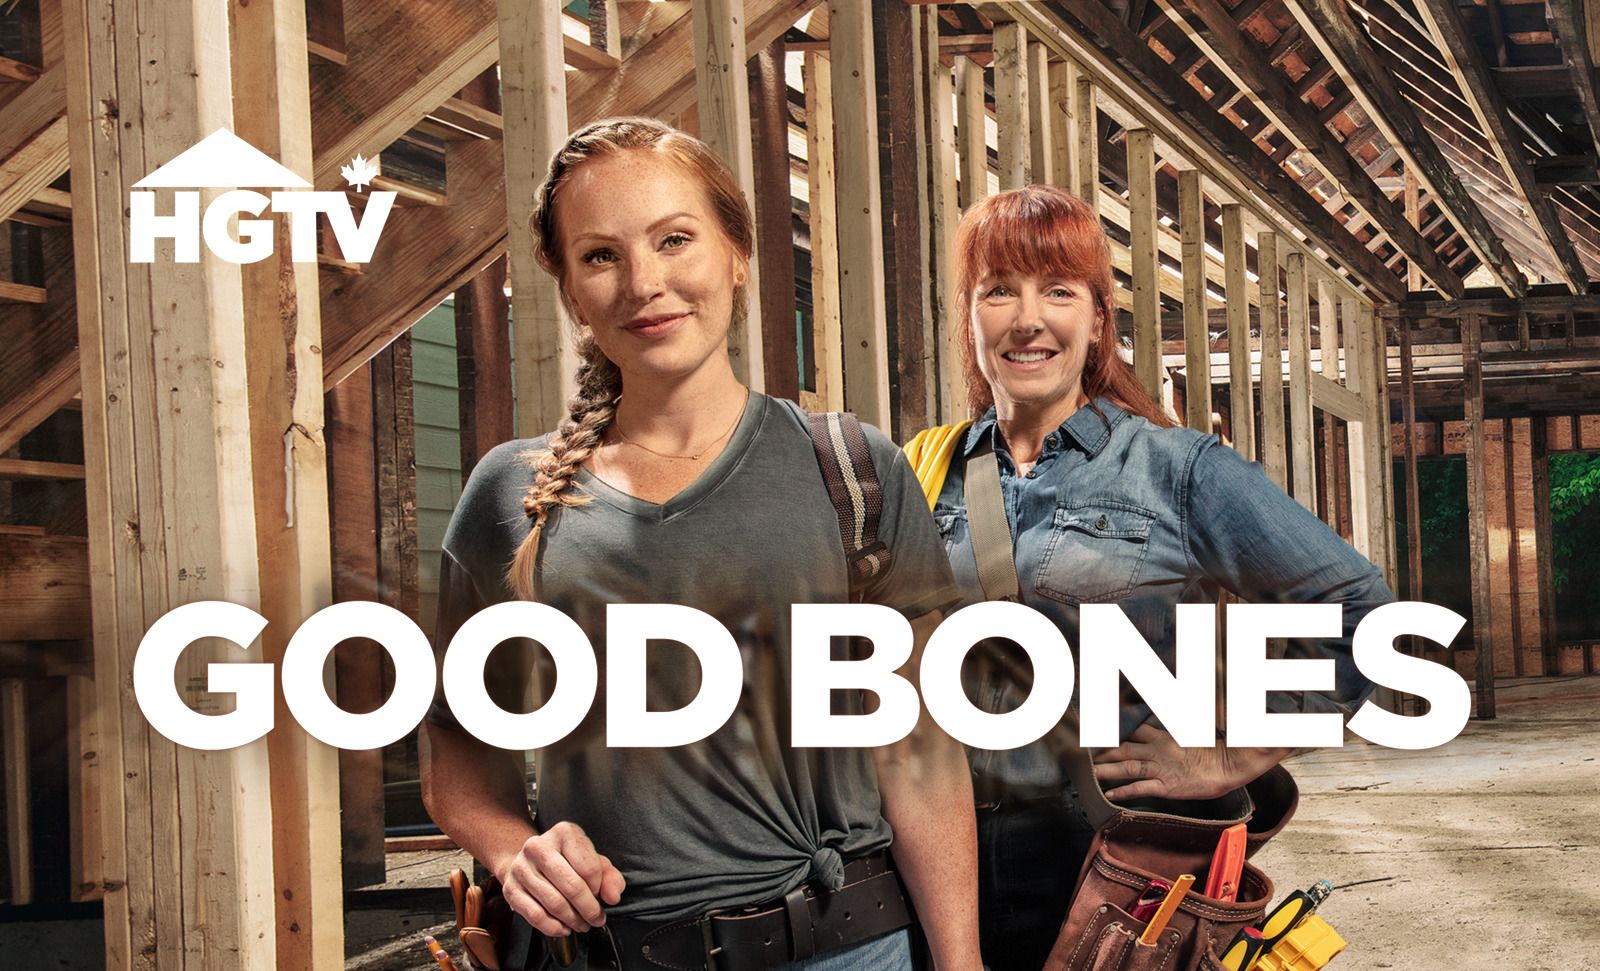 Is “Good Bones Risky Business Season 1” on HGTV